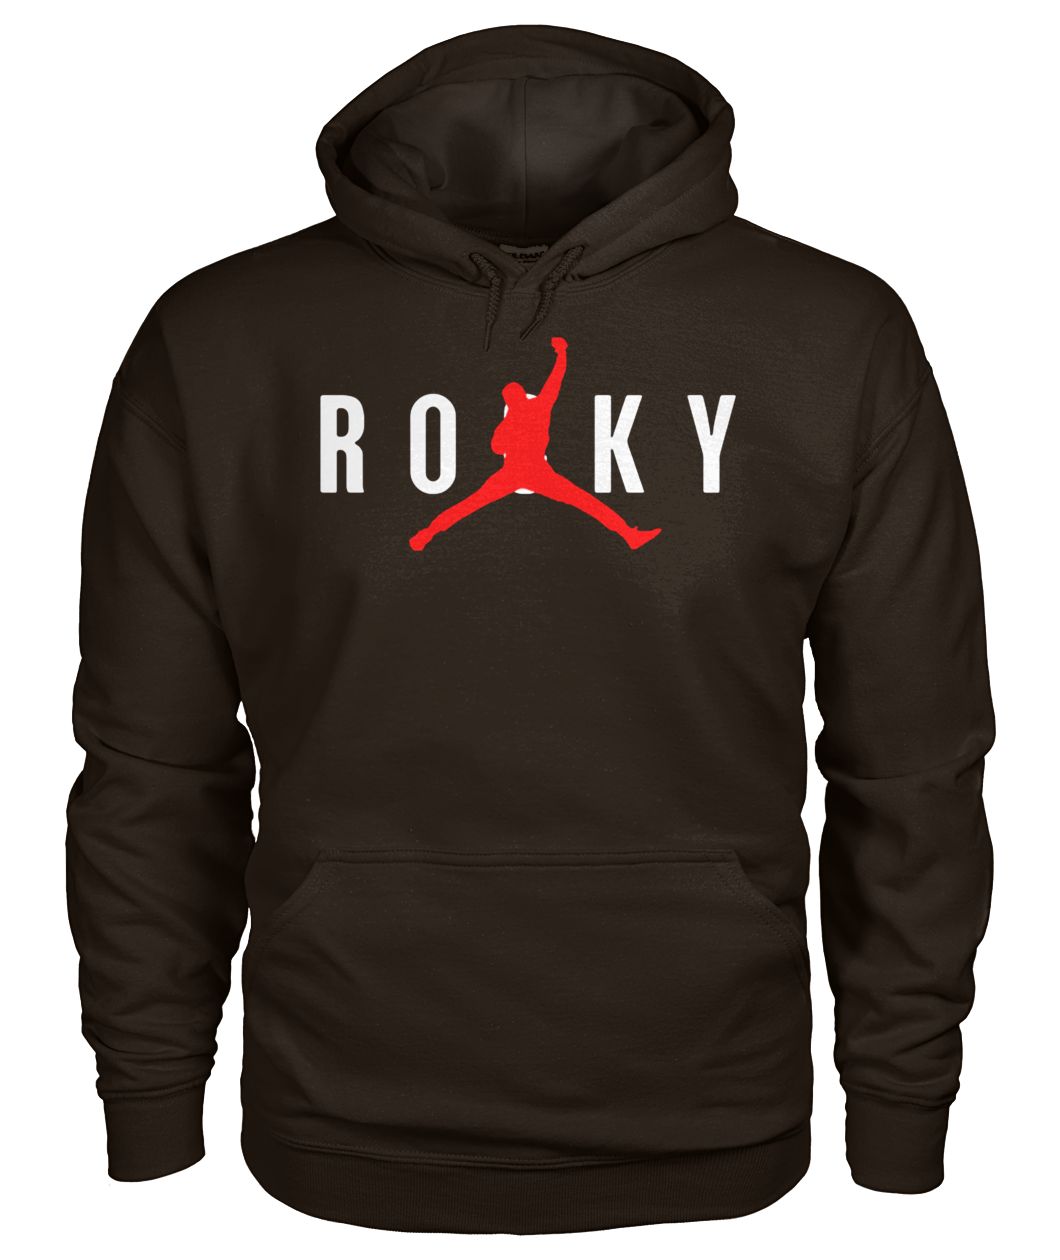 Rocky balboa jordan air gildan hoodie